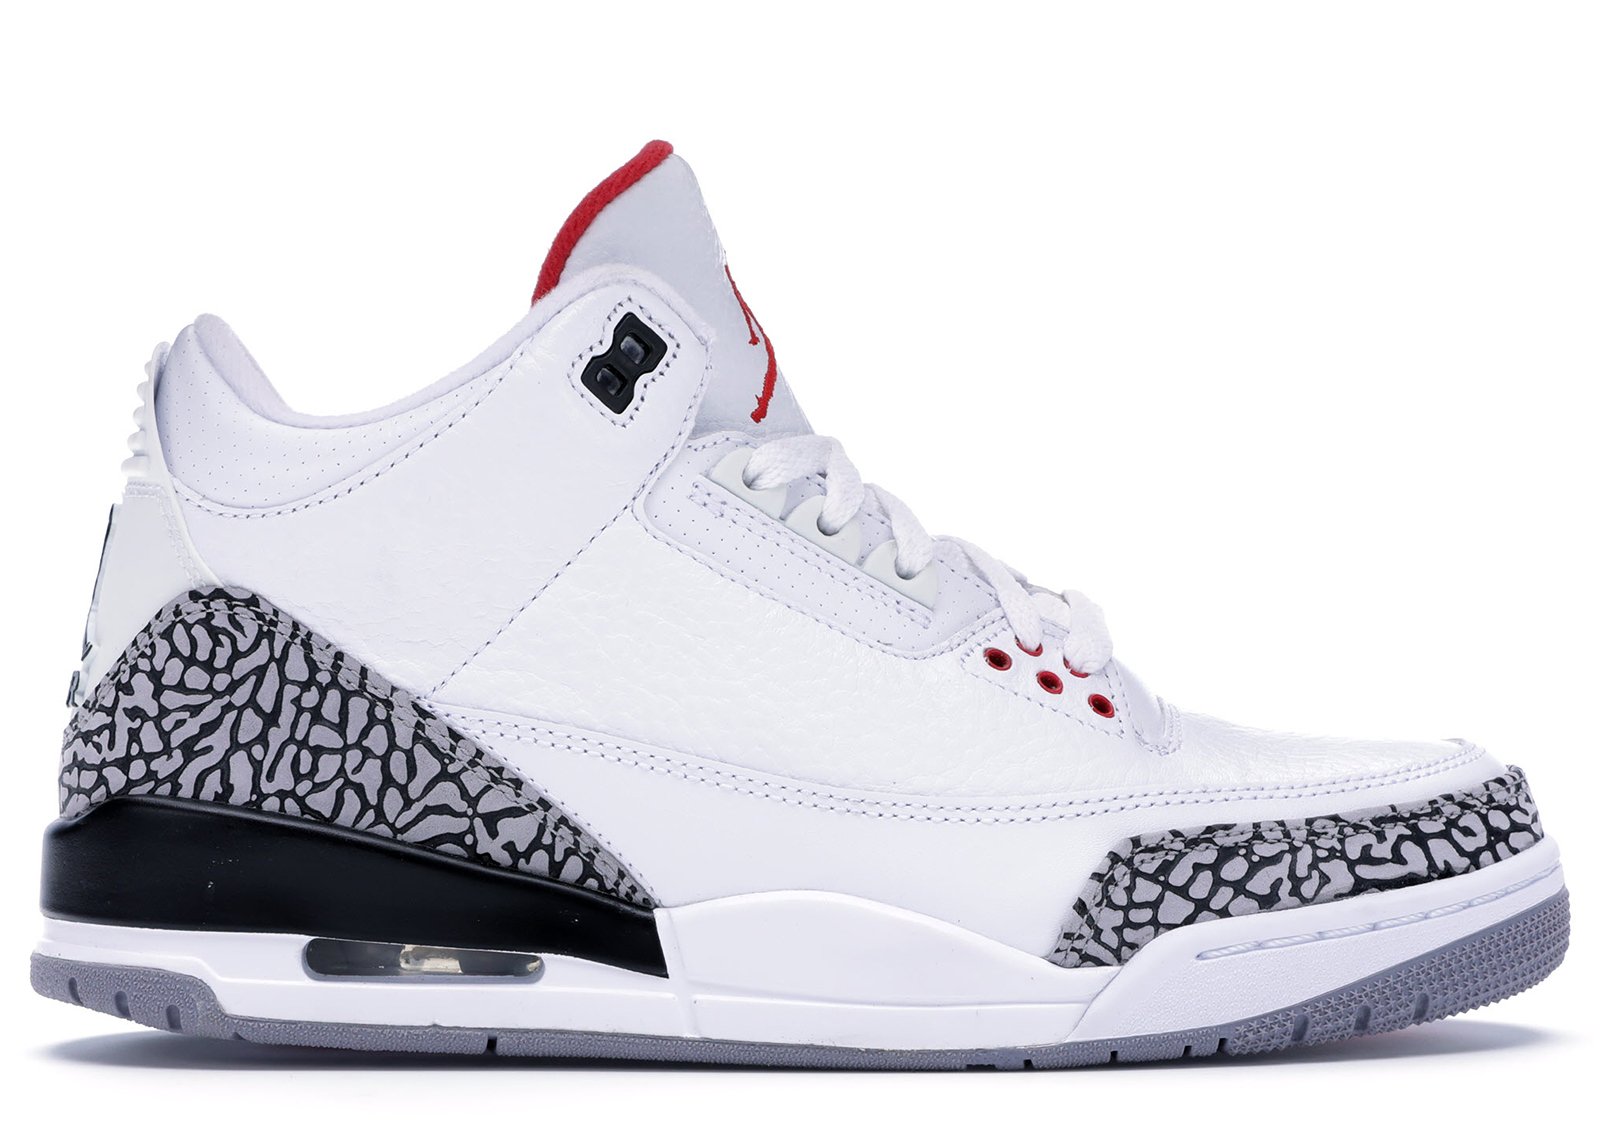 Jordan 3 Retro White Cement (2011) sneakers